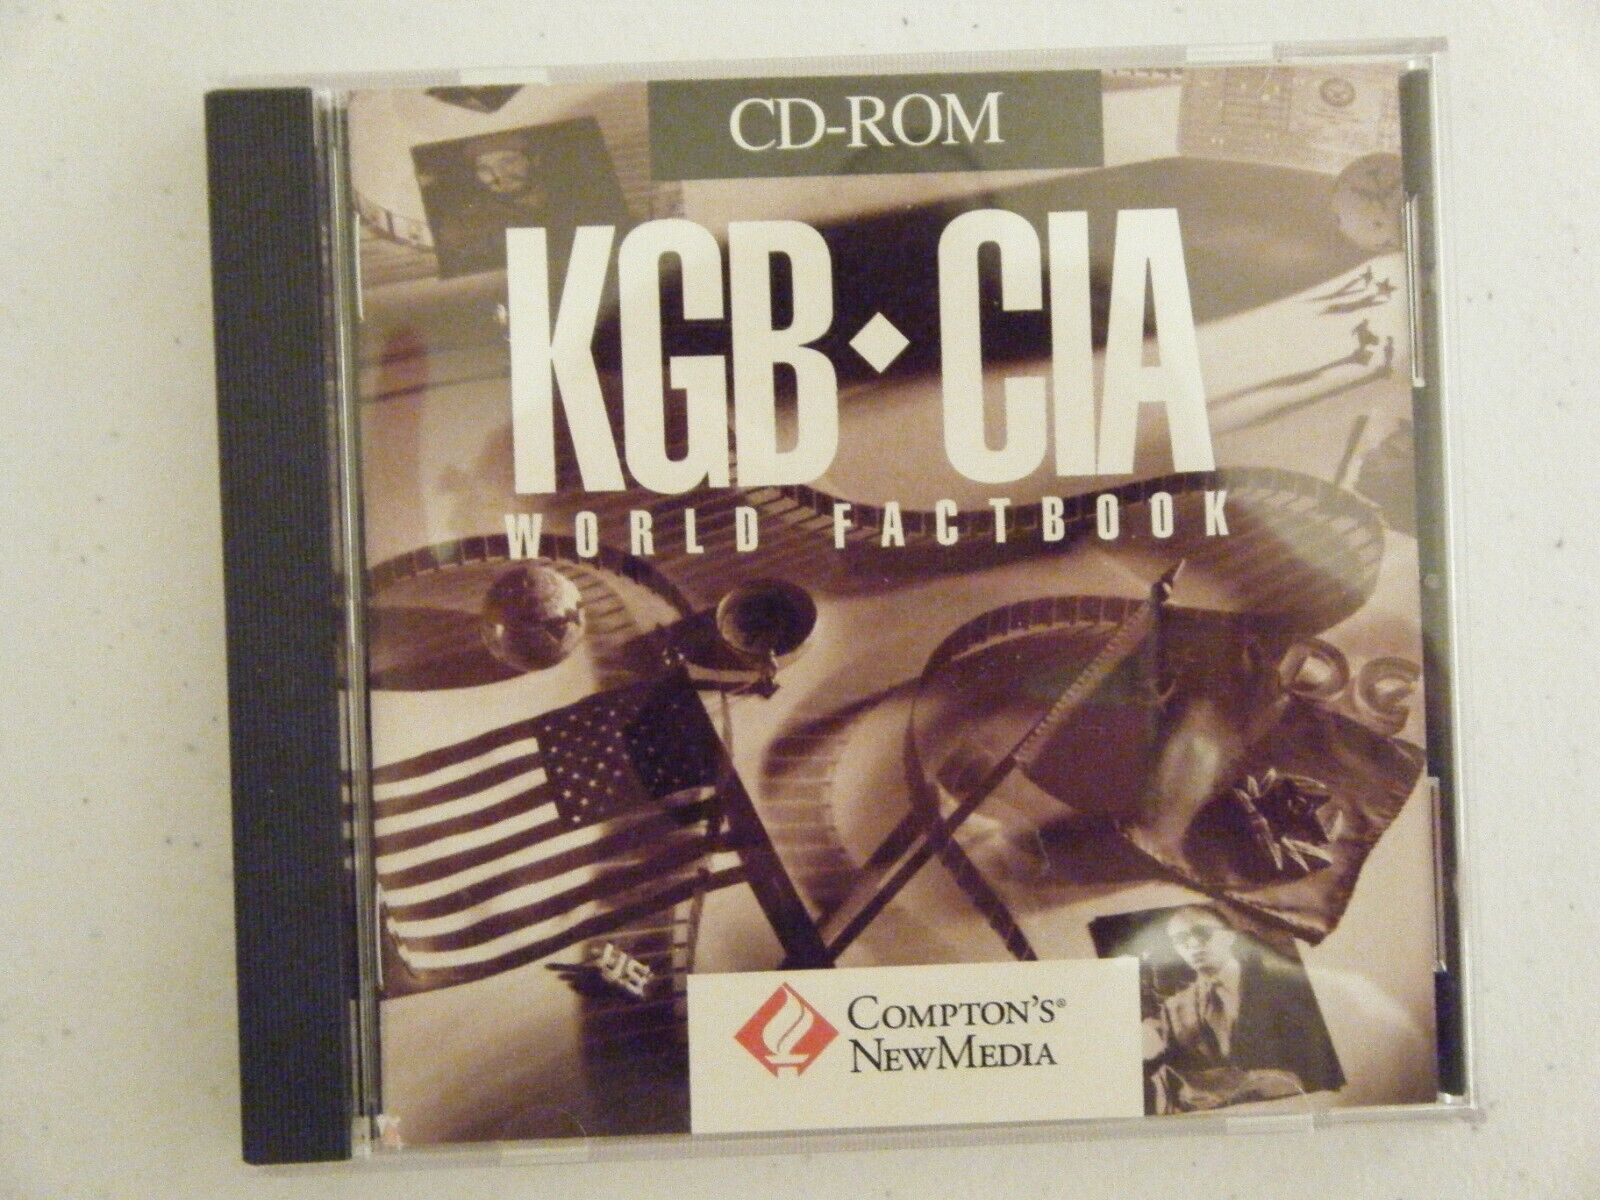 KGB CIA World Factbook for IBM PCs, CD-ROM by Compton's NewMedia, 1992